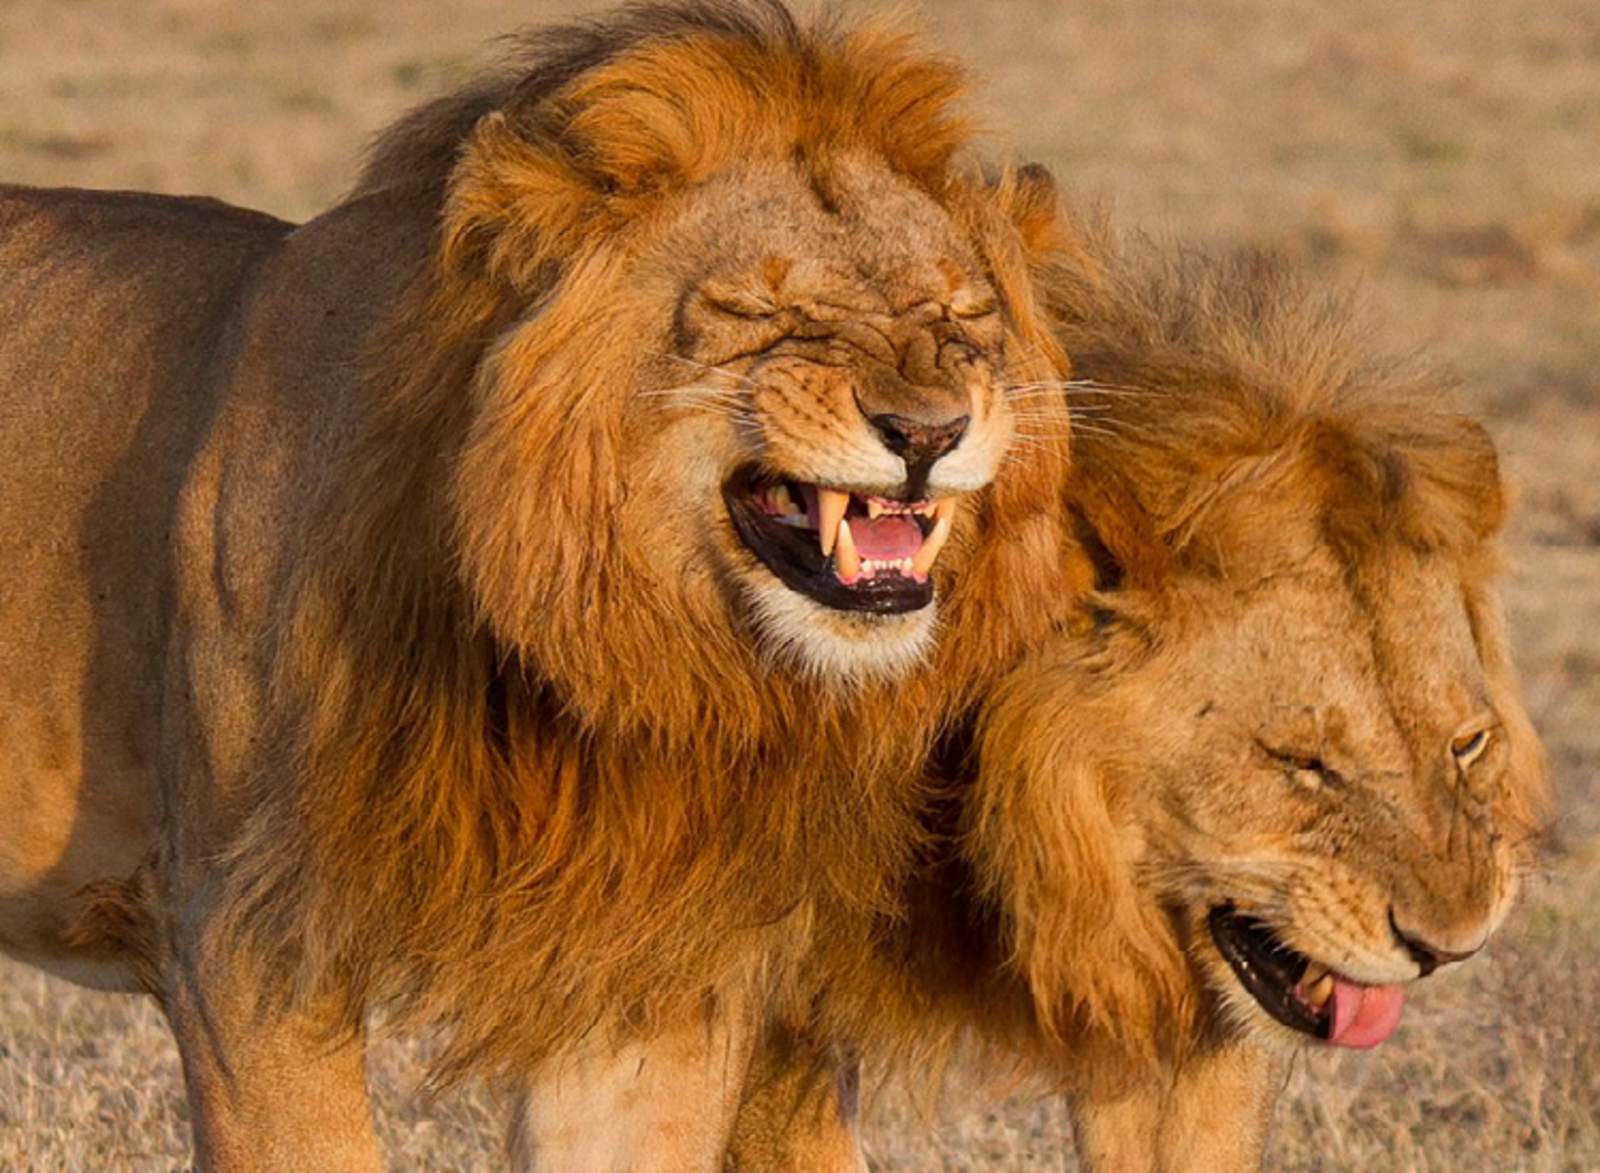 La foto curiosa de dos leones que parecen reír